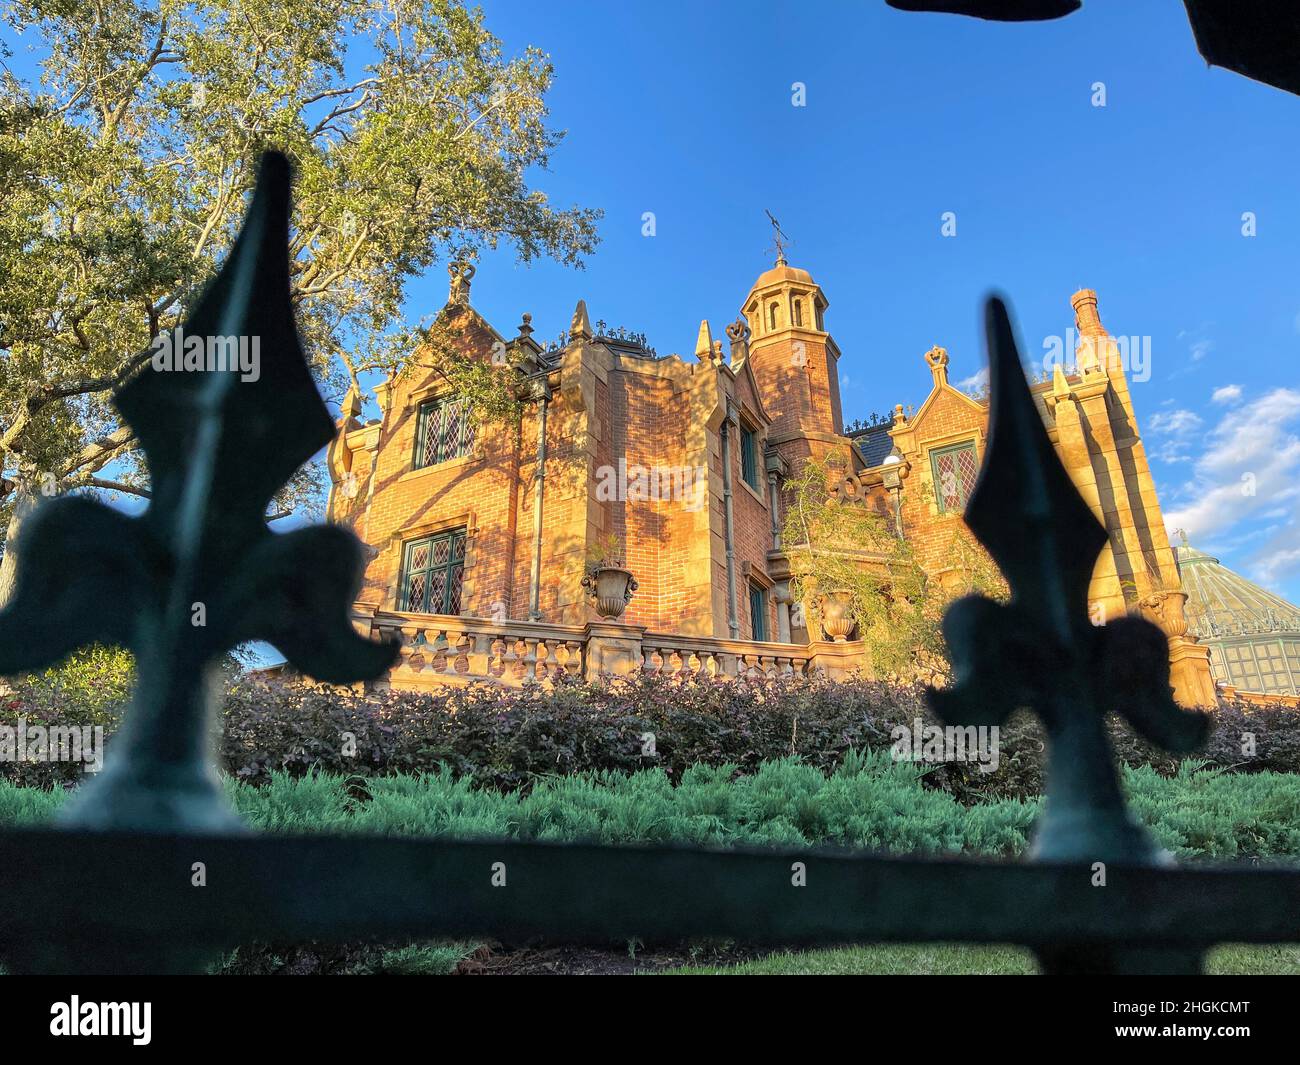 Orlando, FL USA - December 28, 2019: The  Haunted Mansion ride at Walt Disney World Magic Kingdom in Orlando, Florida. Stock Photo